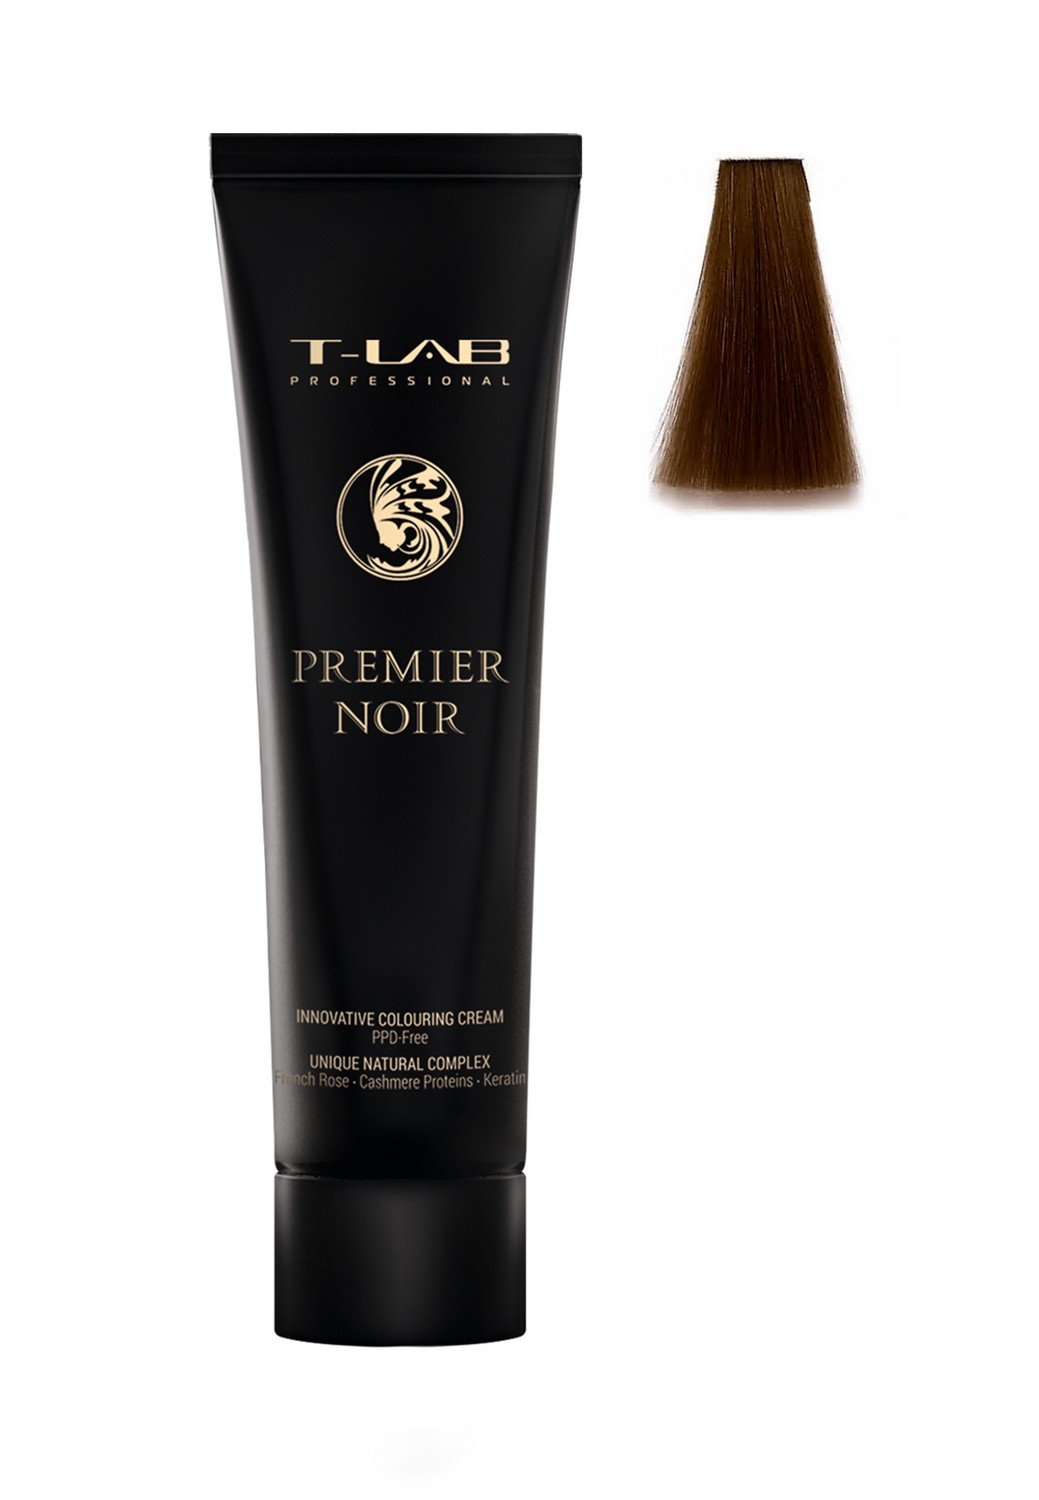 Крем-фарба T-LAB Professional Premier Noir colouring cream, відтінок 6.0 (natural dark blonde) - фото 2